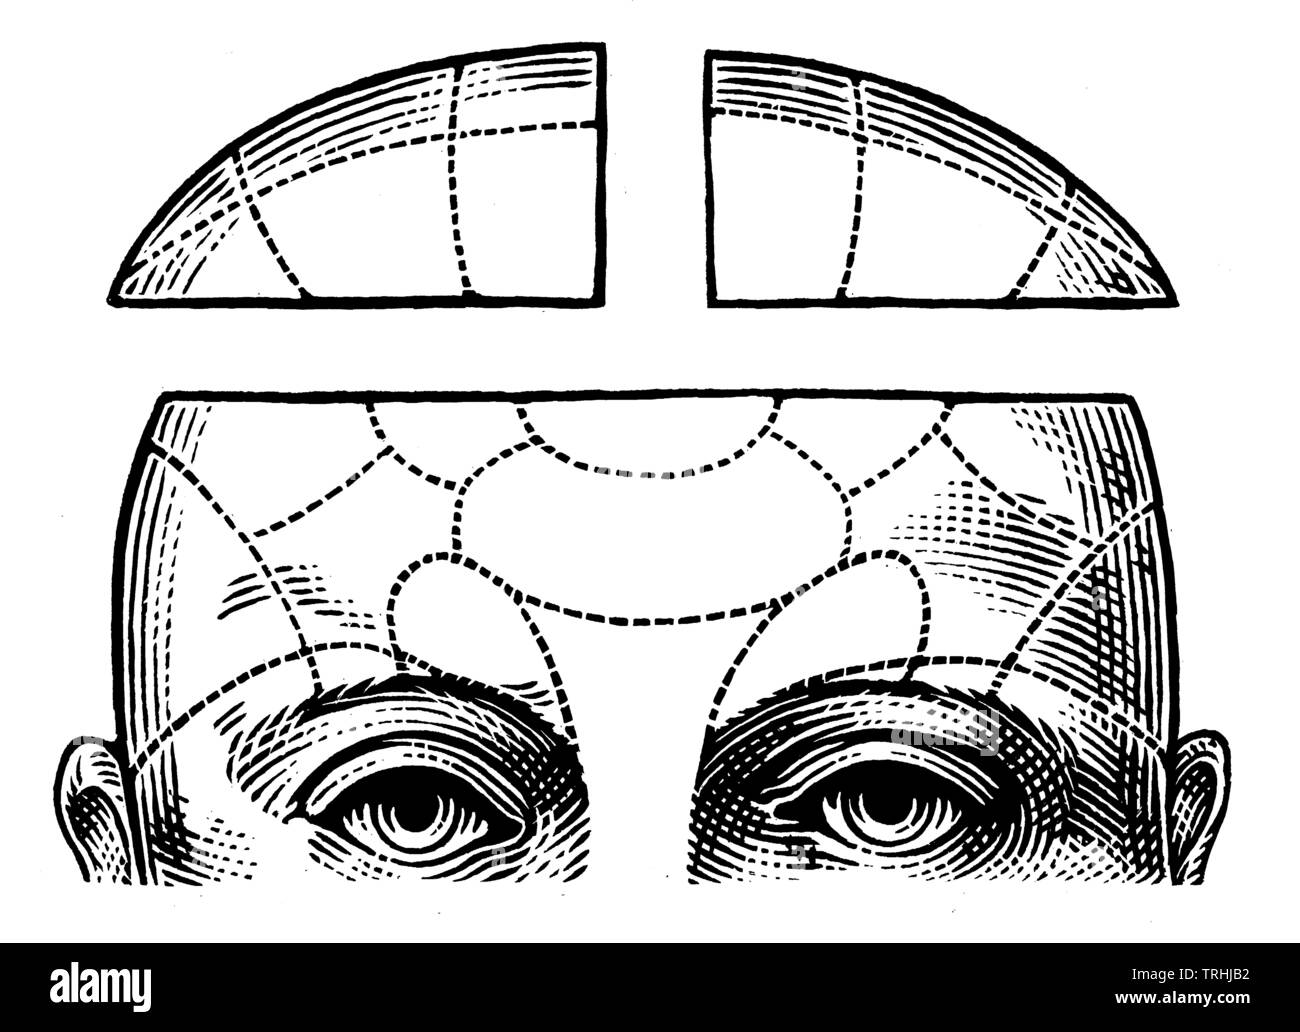 Anatomic drawing of human head Stock Photo